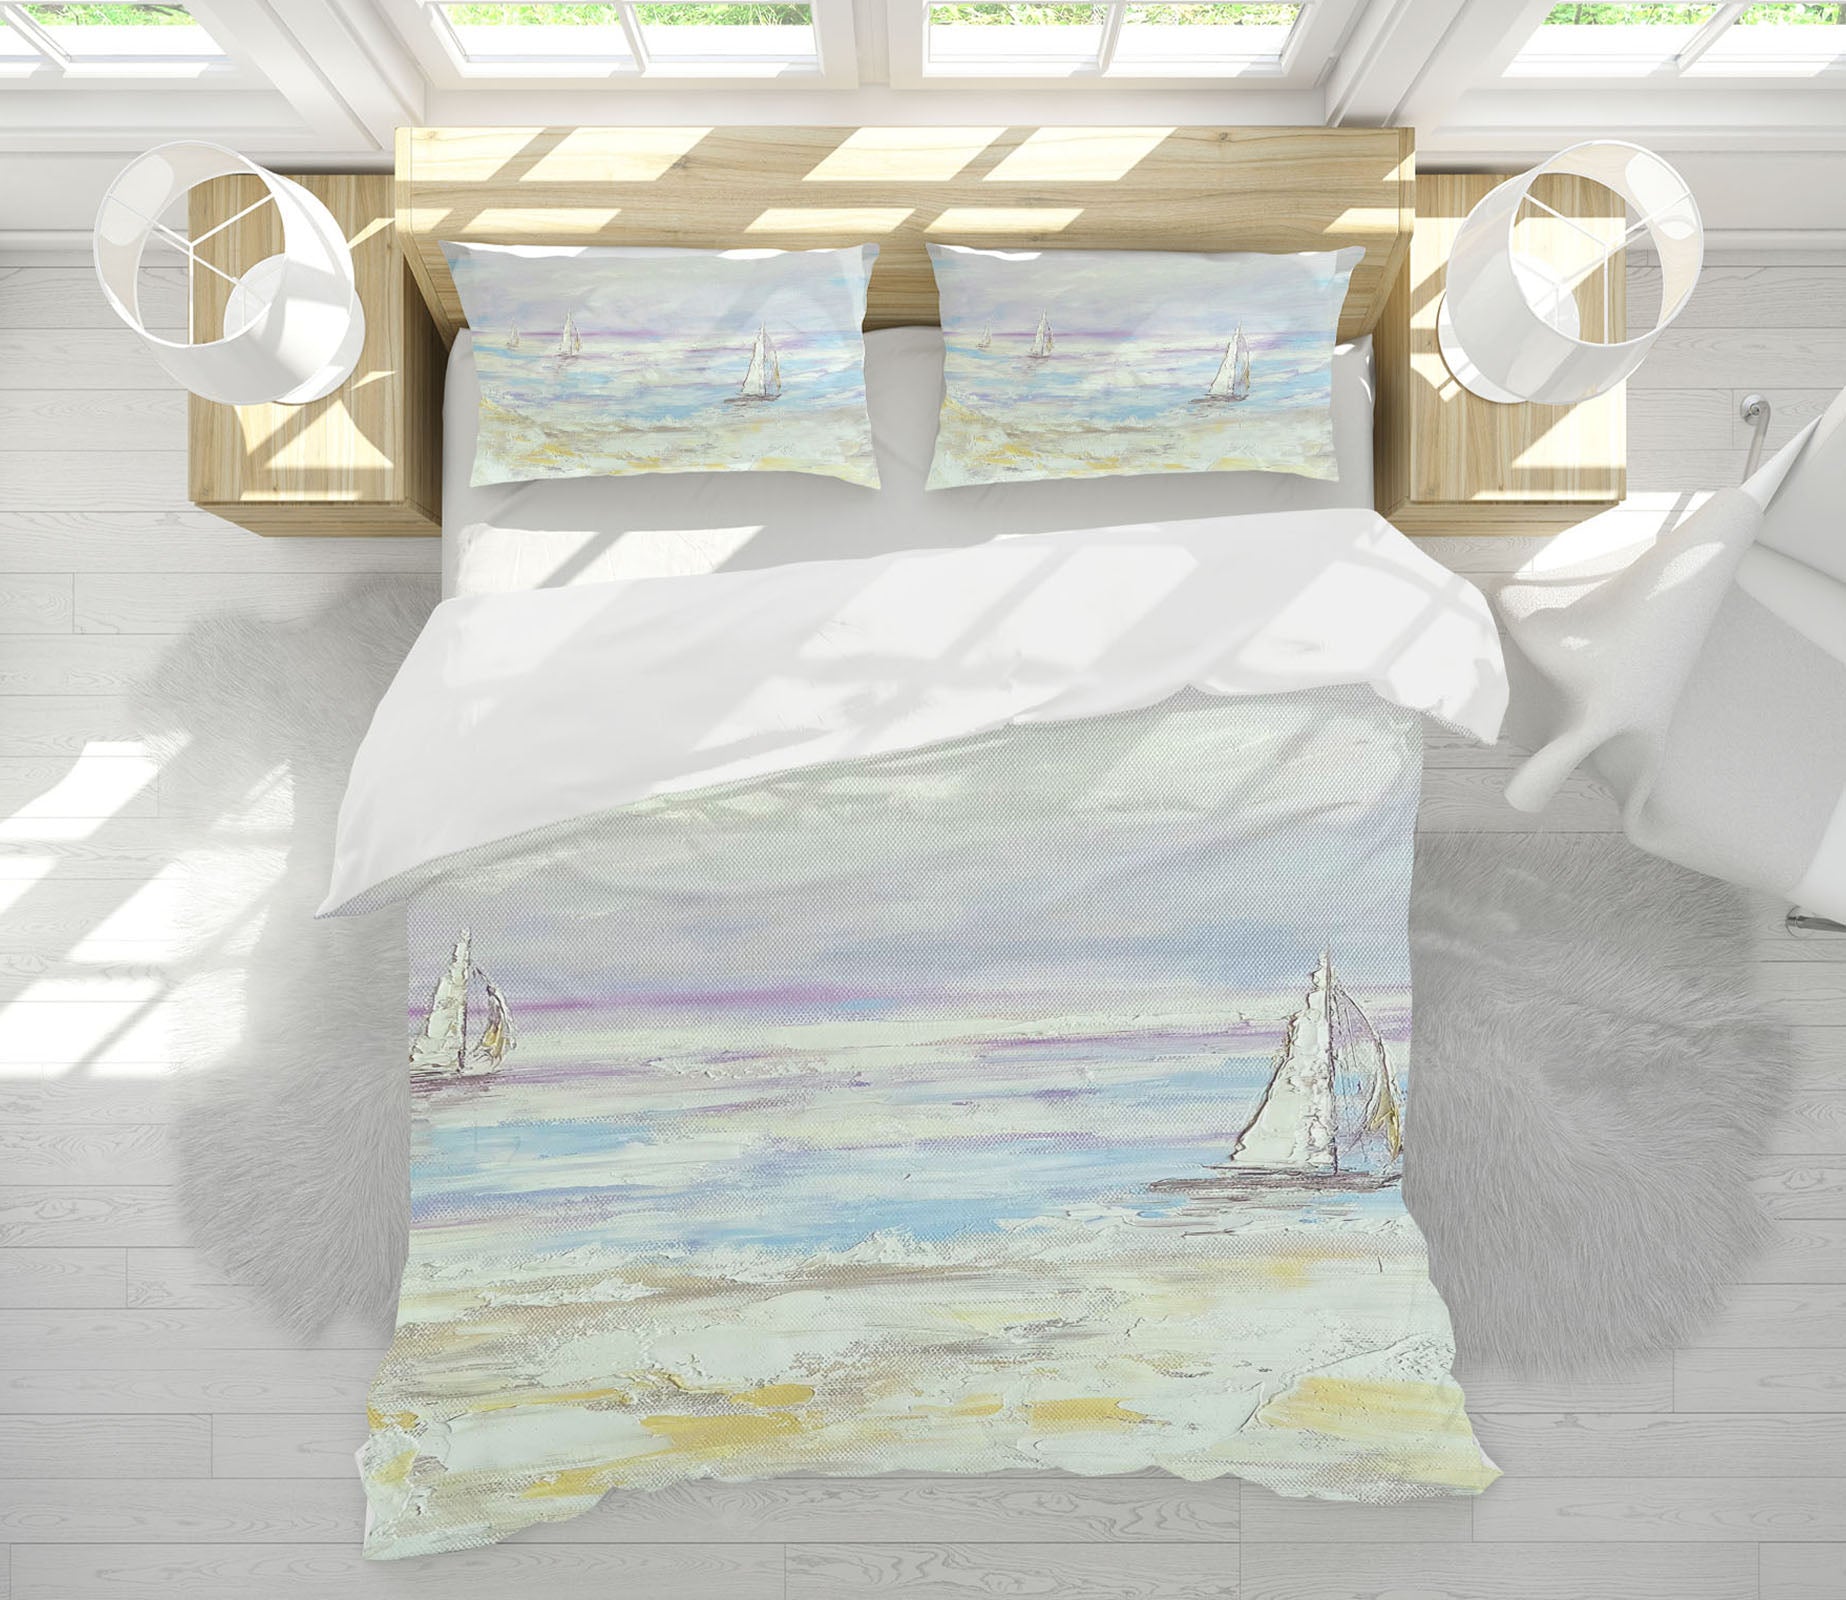 3D Sailing Boat 3794 Skromova Marina Bedding Bed Pillowcases Quilt Cover Duvet Cover